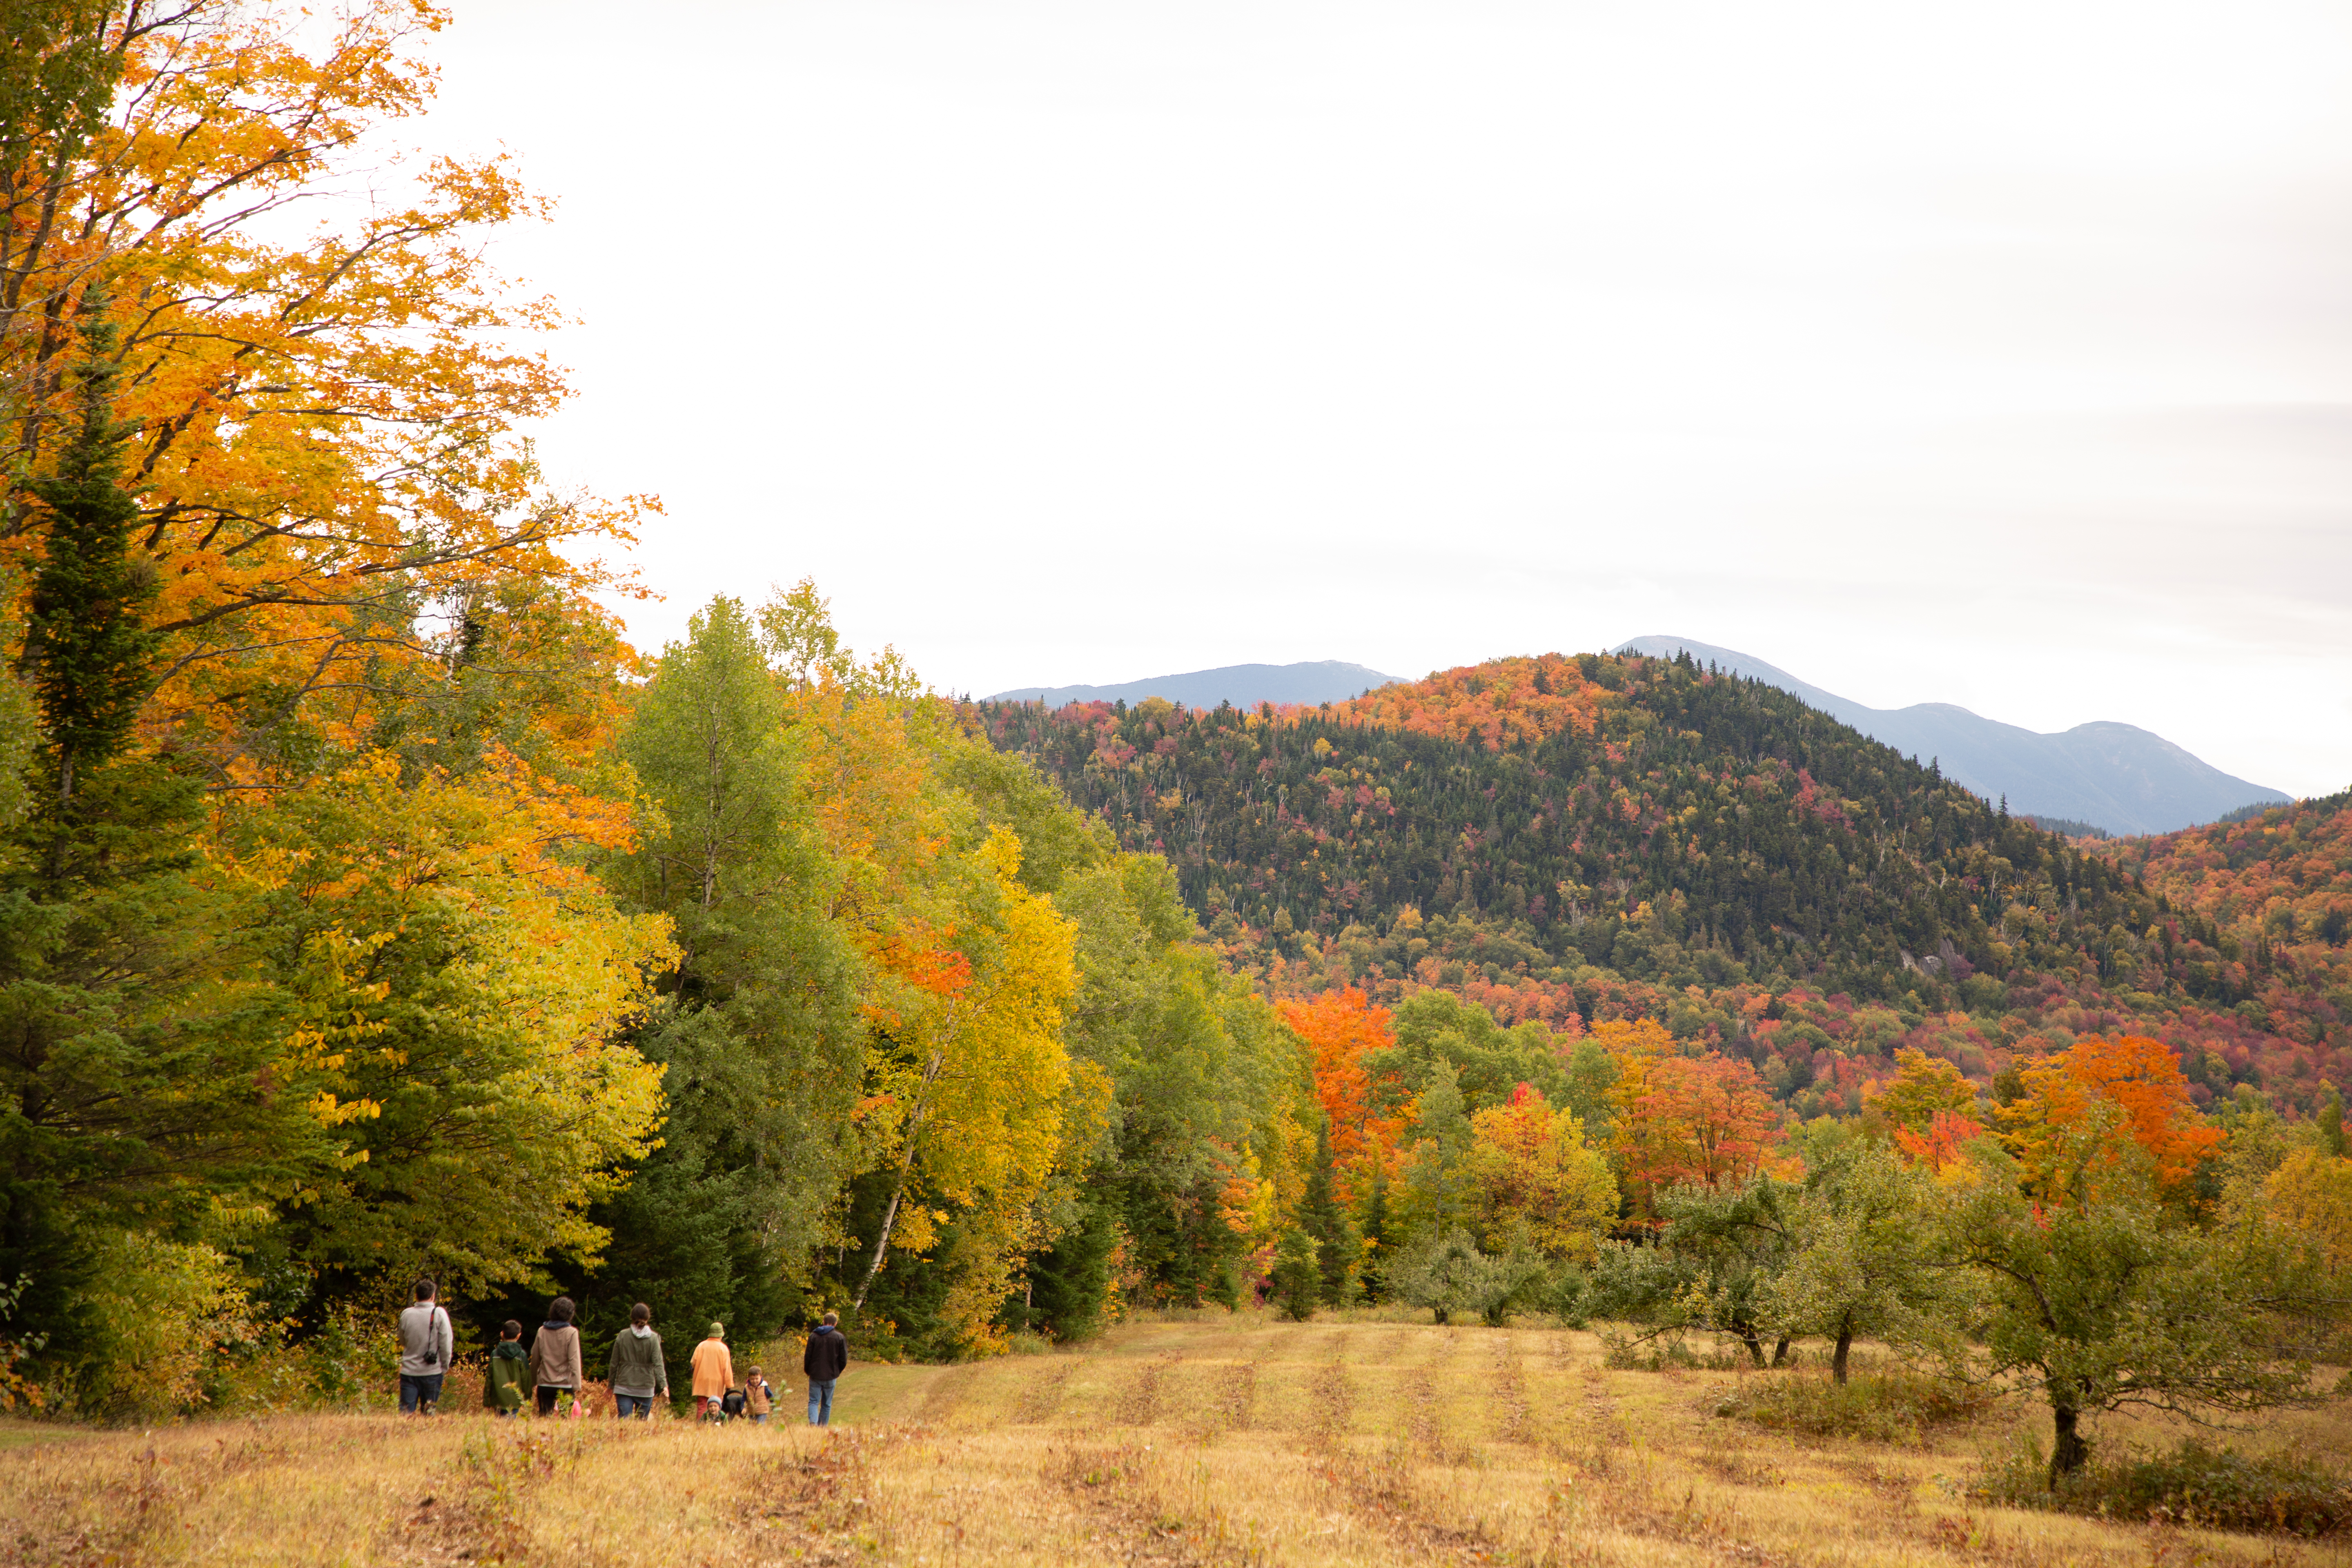 A group of people walk on a field amid mountain fall foliage.